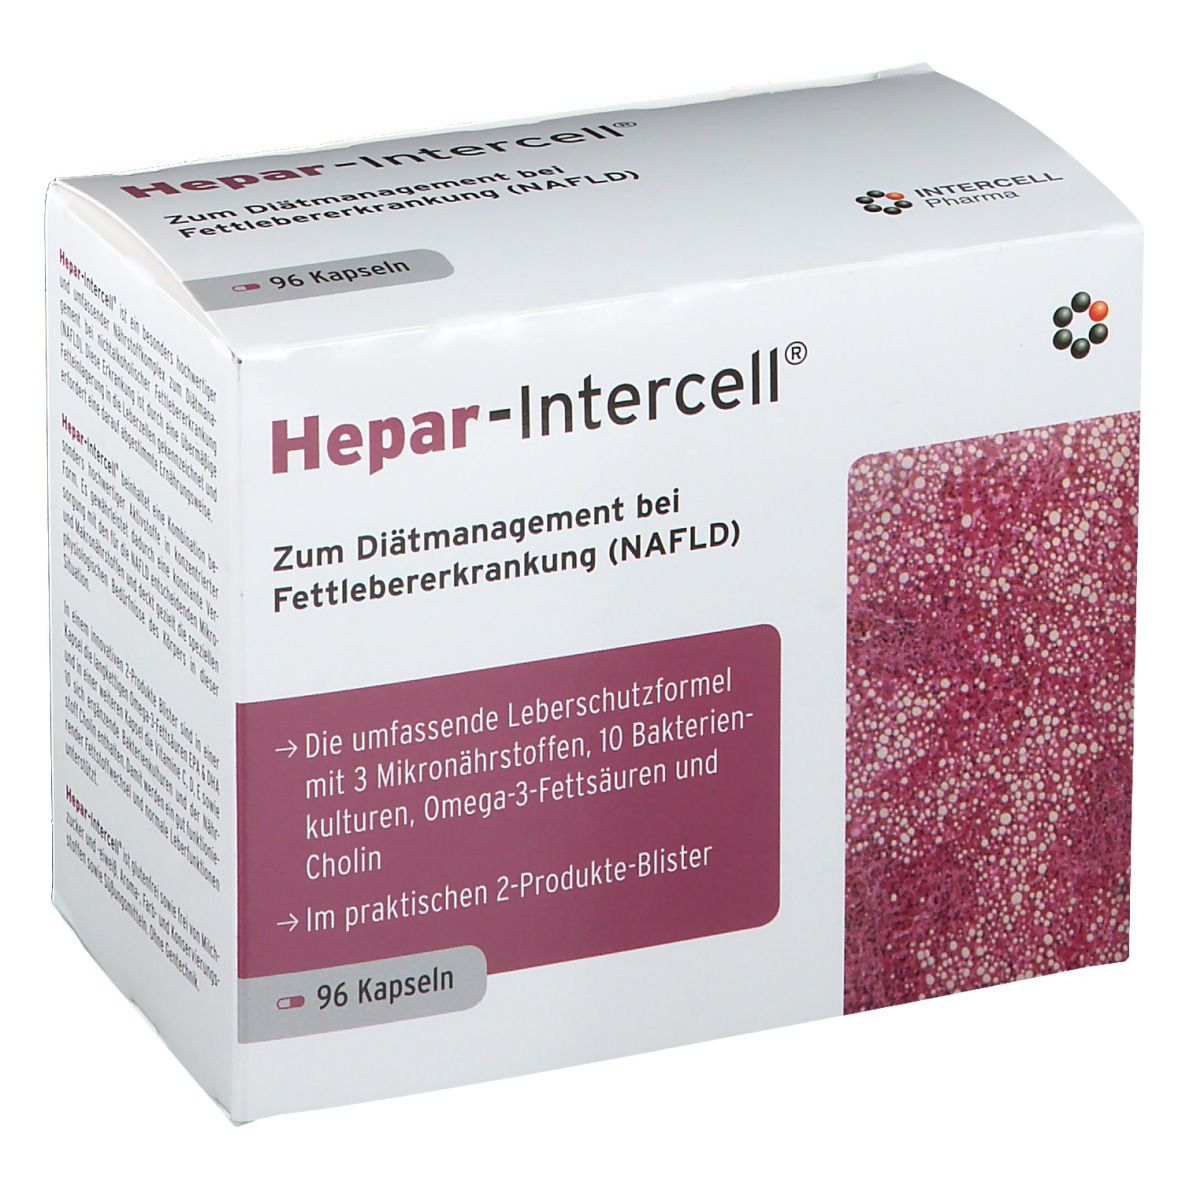 Hepar-Intercell®